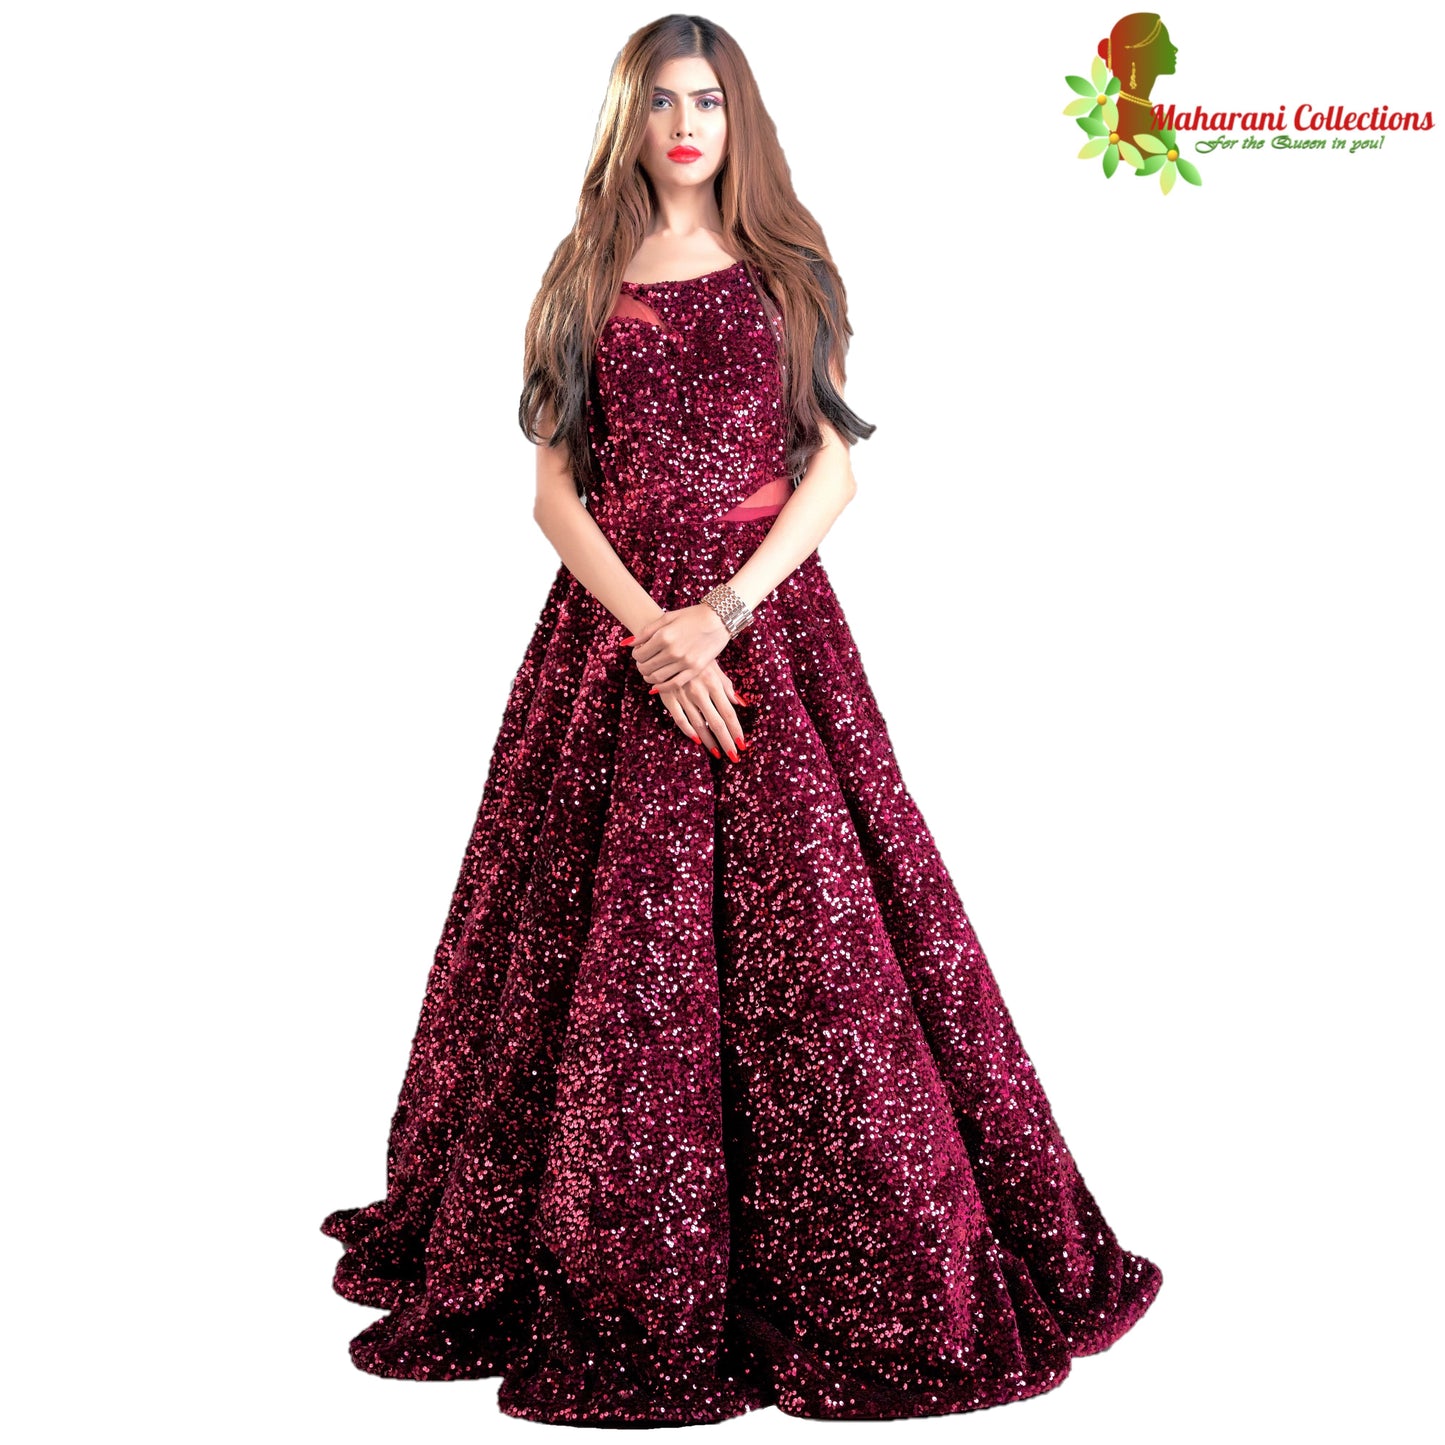 Maharani's Designer Ball (Princess) Gown - Dark Maroon with Glittering Sequins & Thread Work